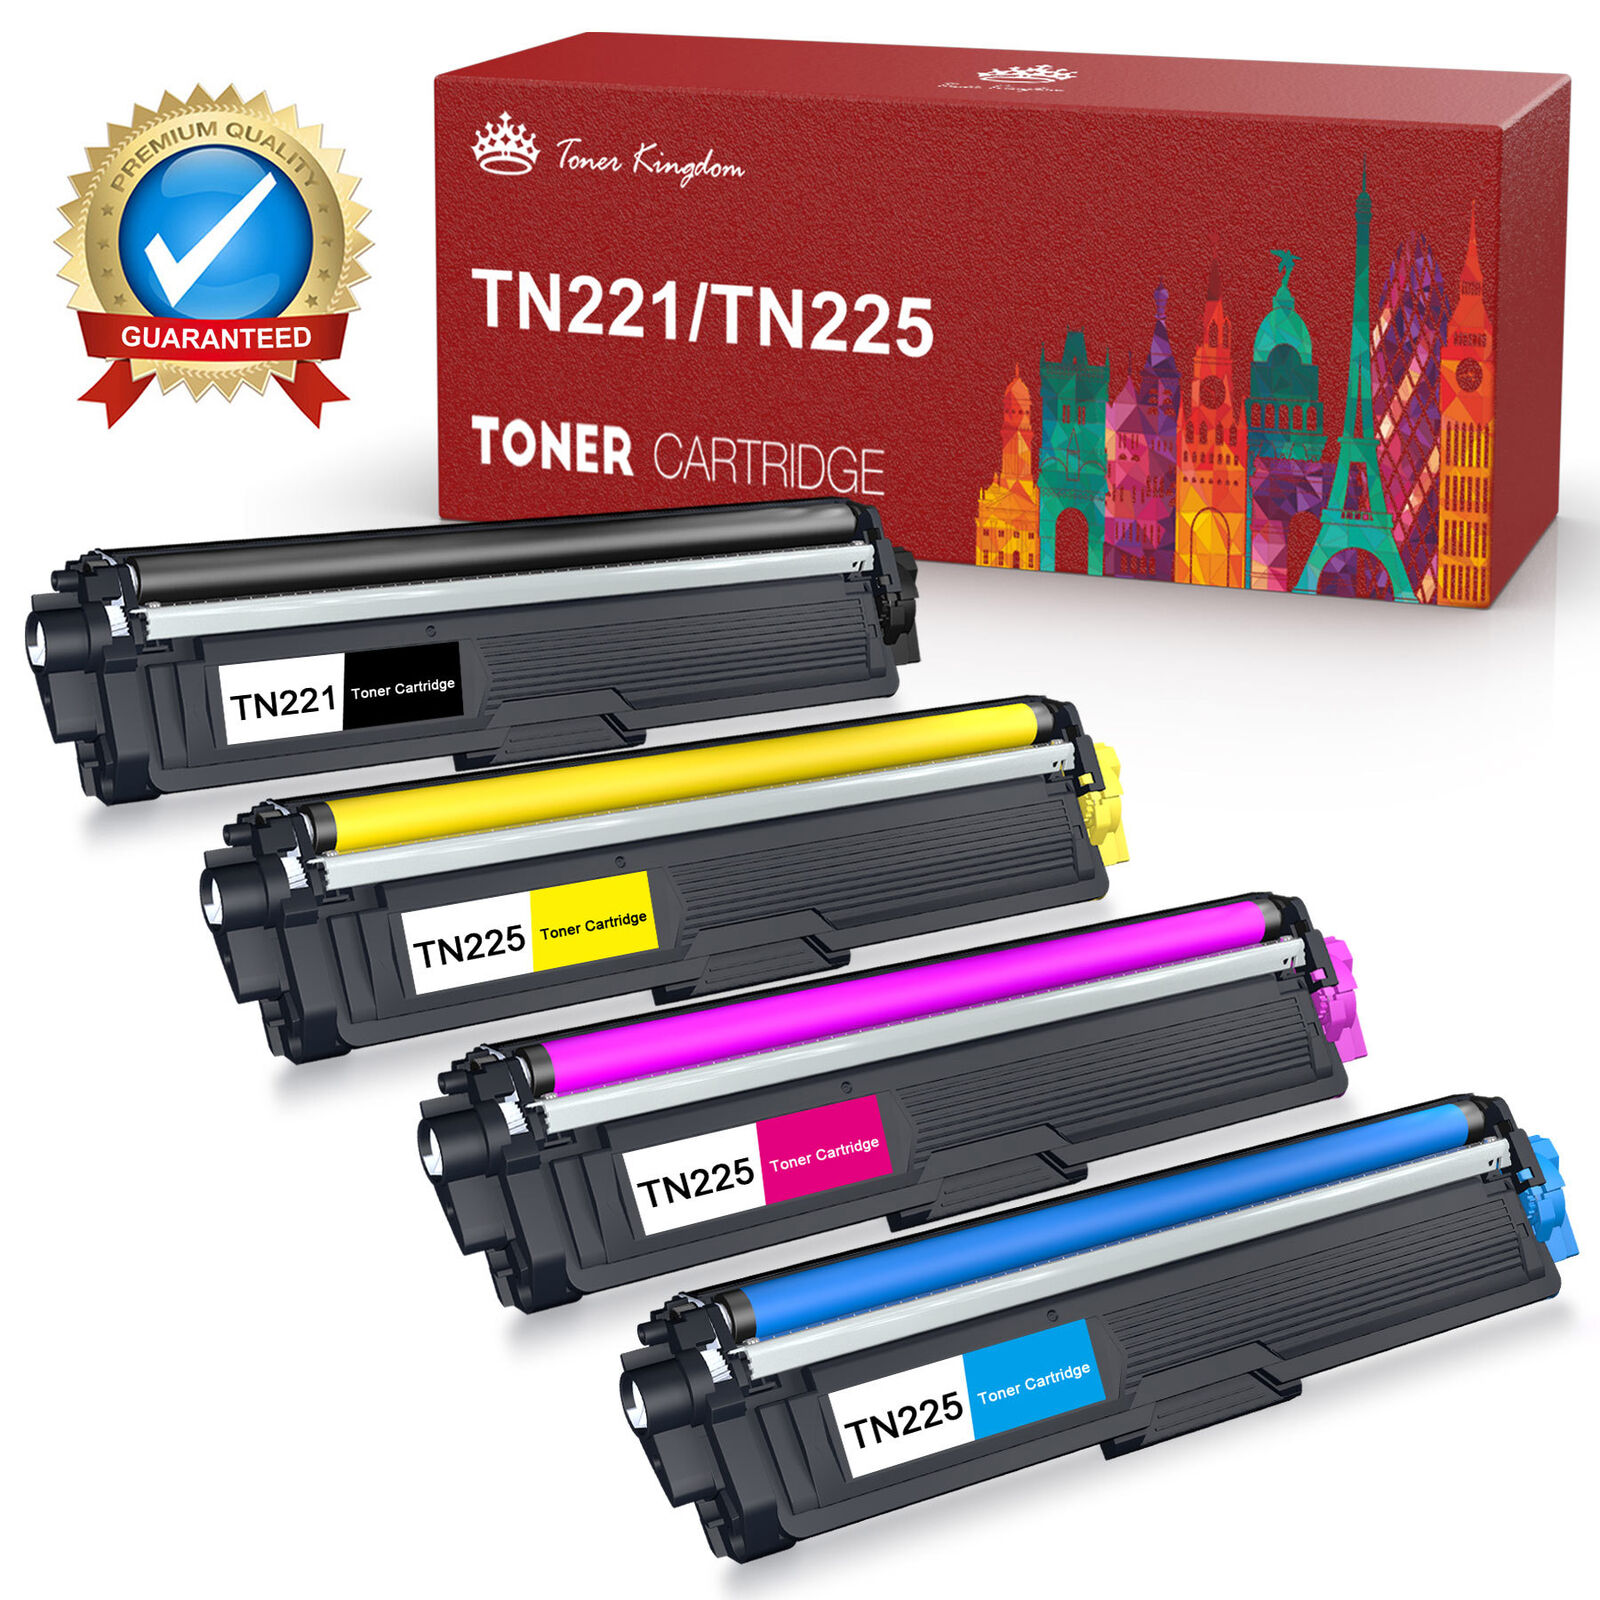 4x TN221 TN225 High Yield Toner Cartridge for Brother MFC-9130CW 9330CDW 9340CDW